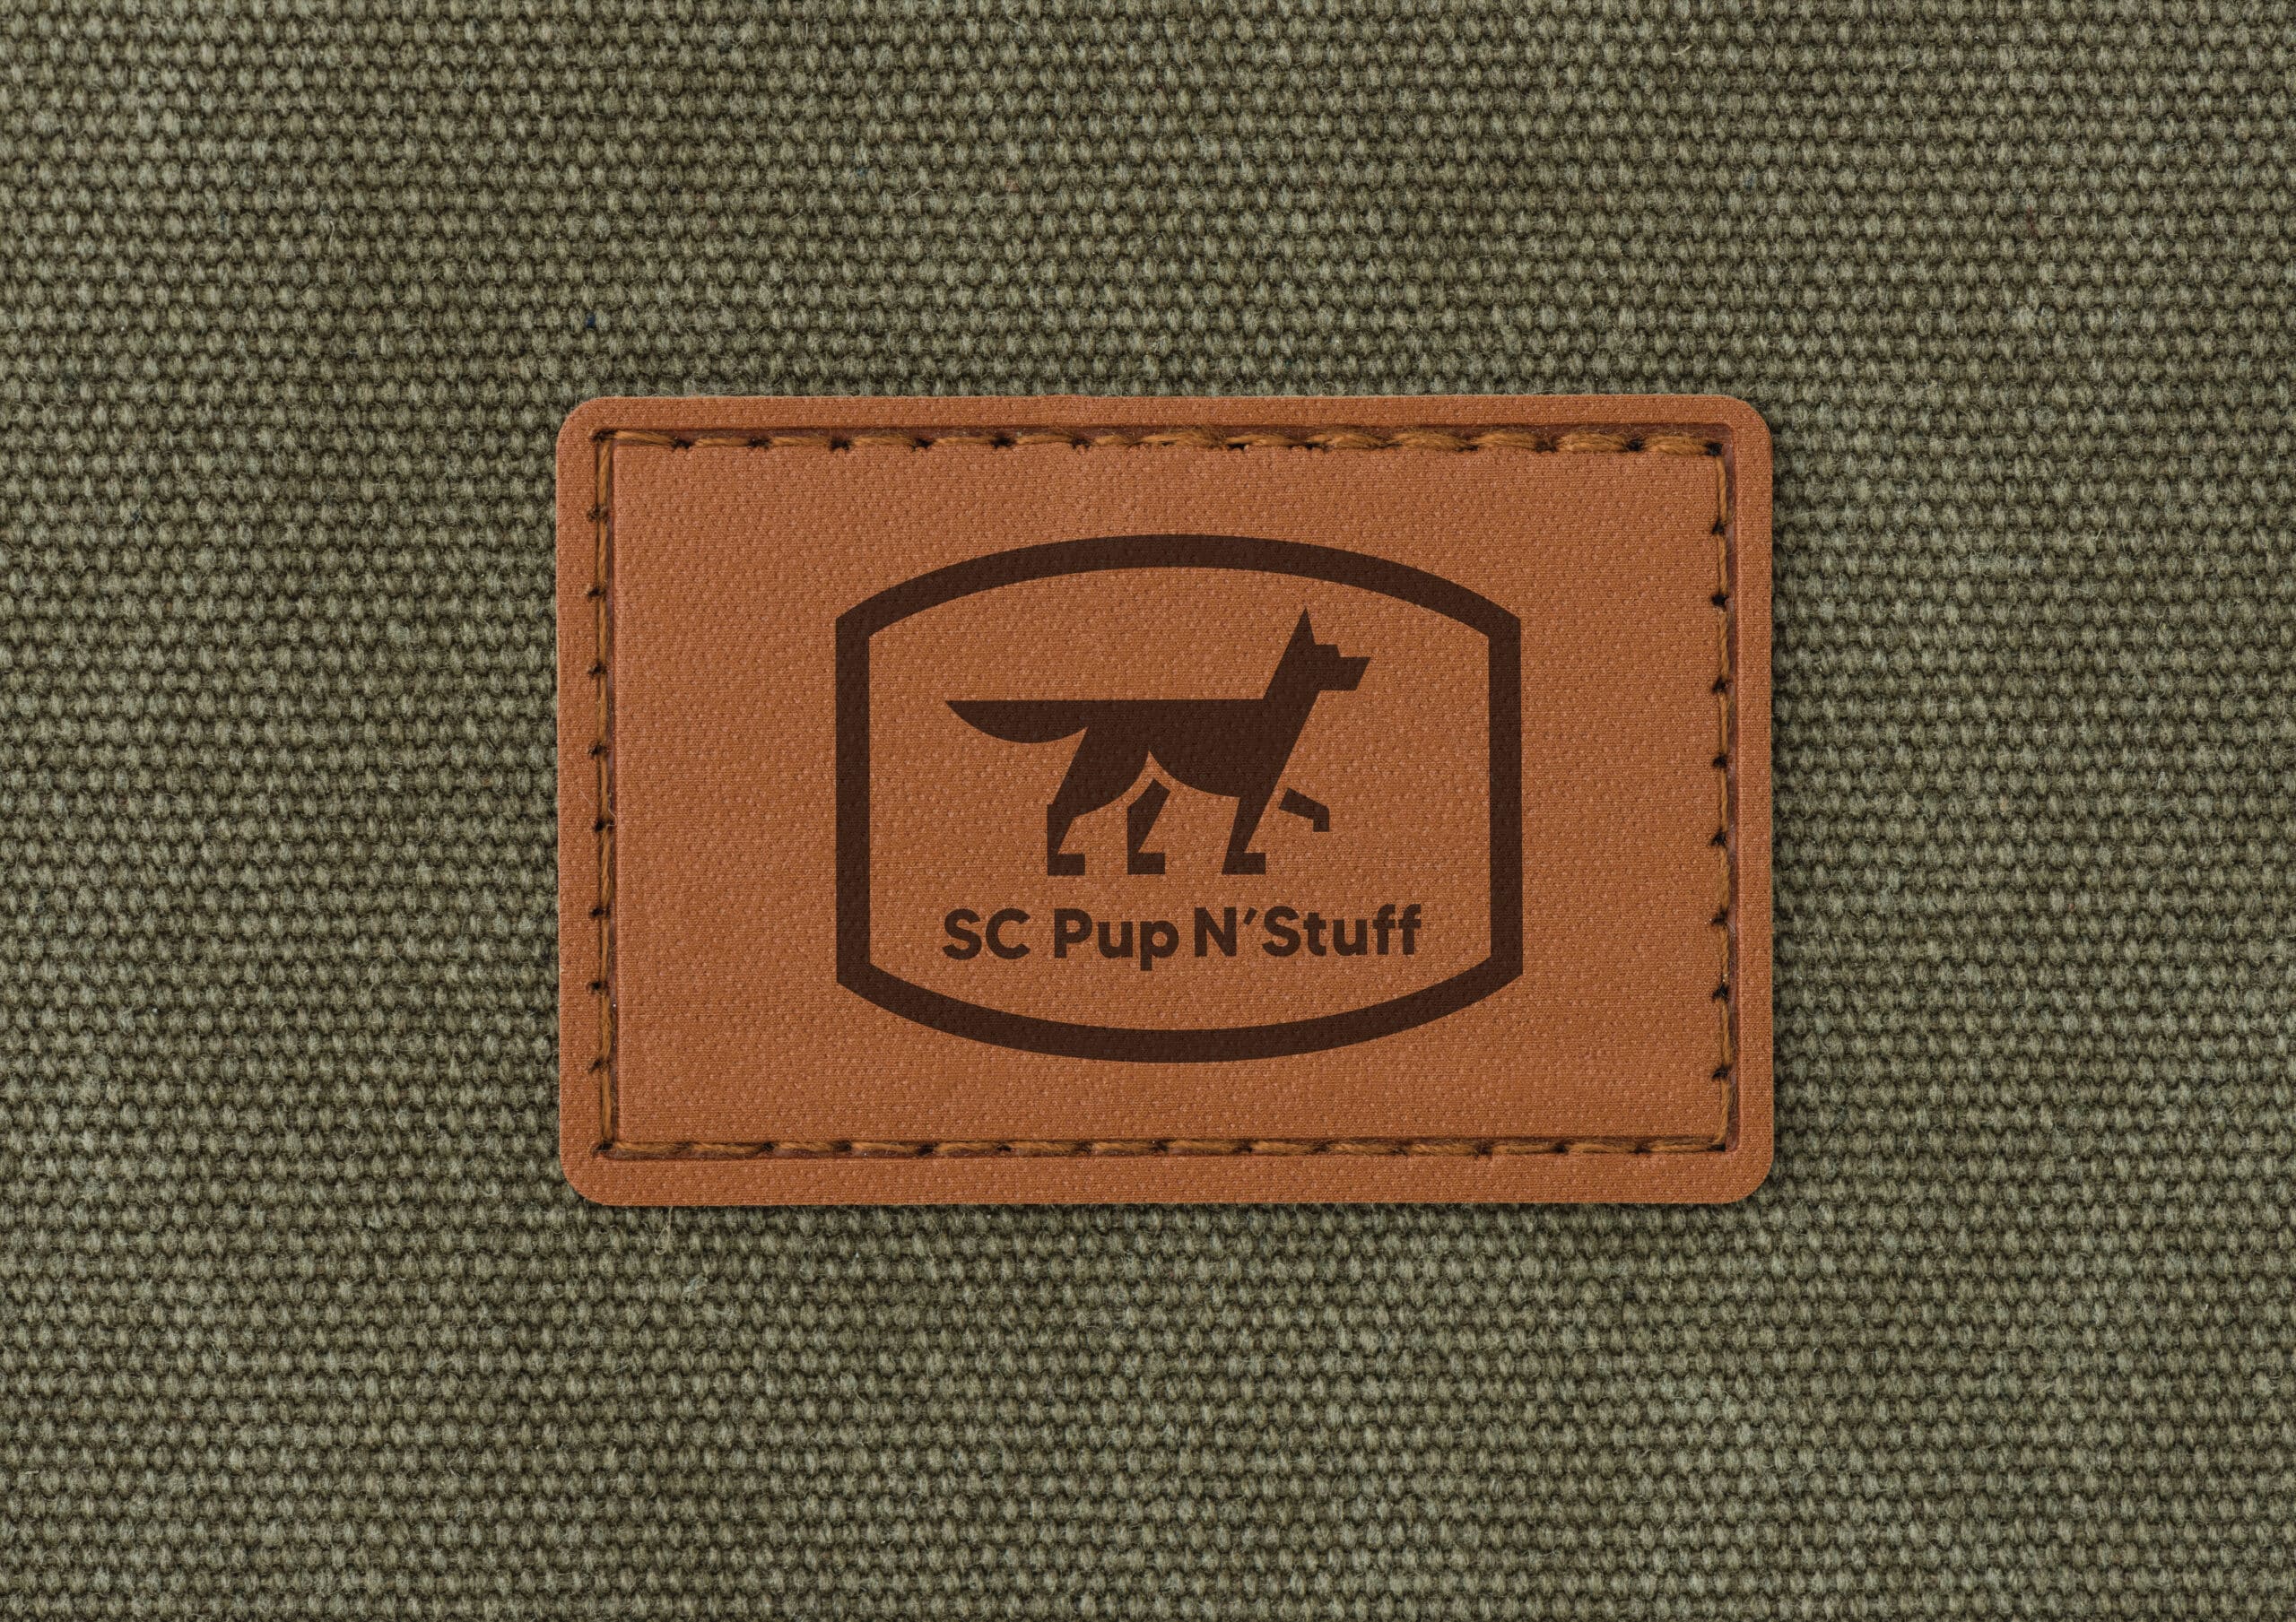 Label design for dog logo SC Pup N Stuff by Stellen Design branding and logo design agency in Los Angeles California specializing in Brand Design